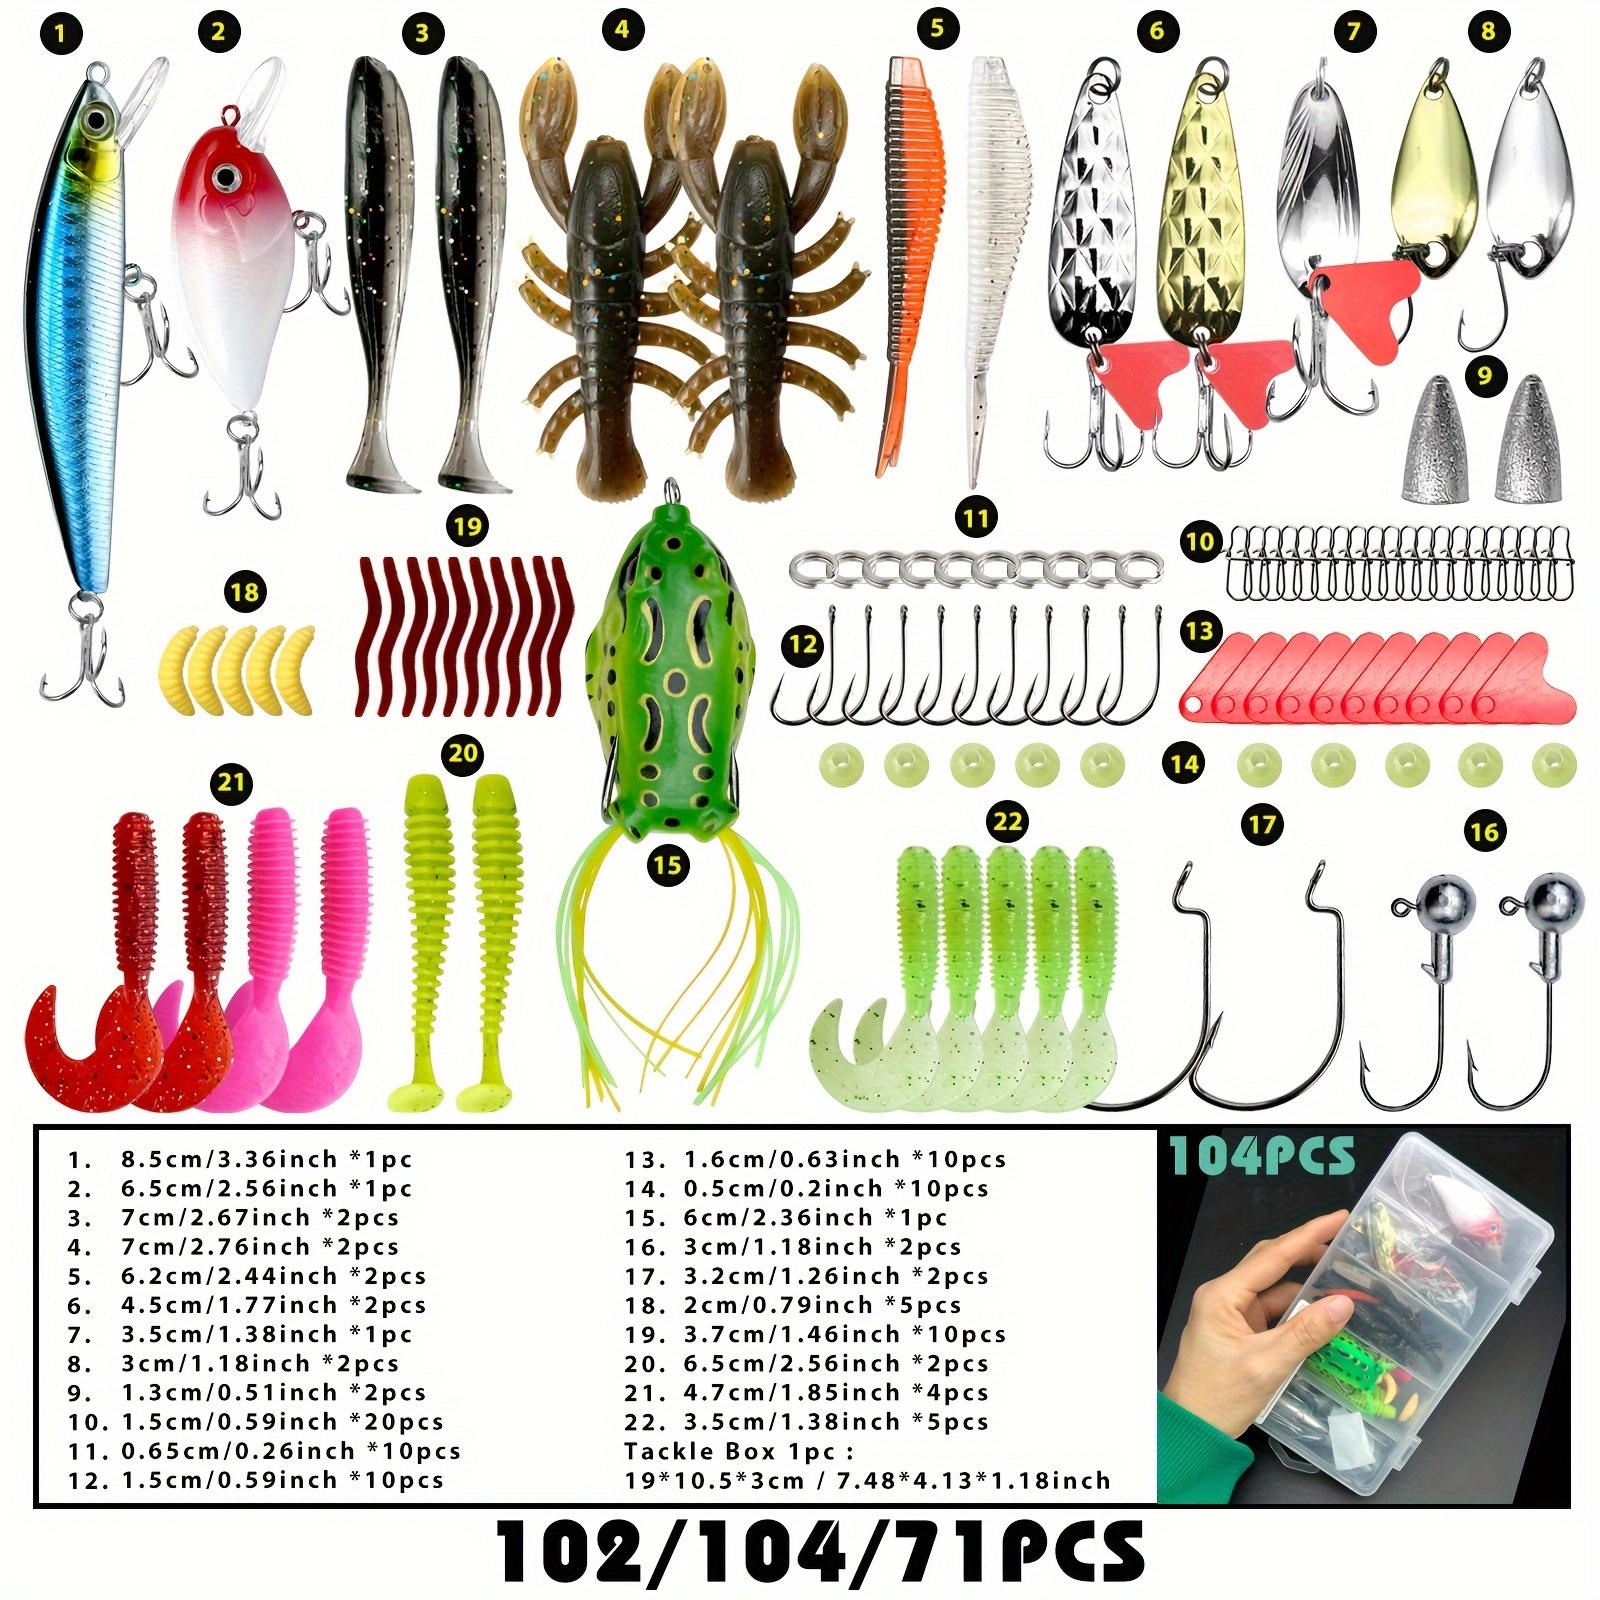 302pcs/box Carp Fishing Accessories Terminal Tackle Kit With